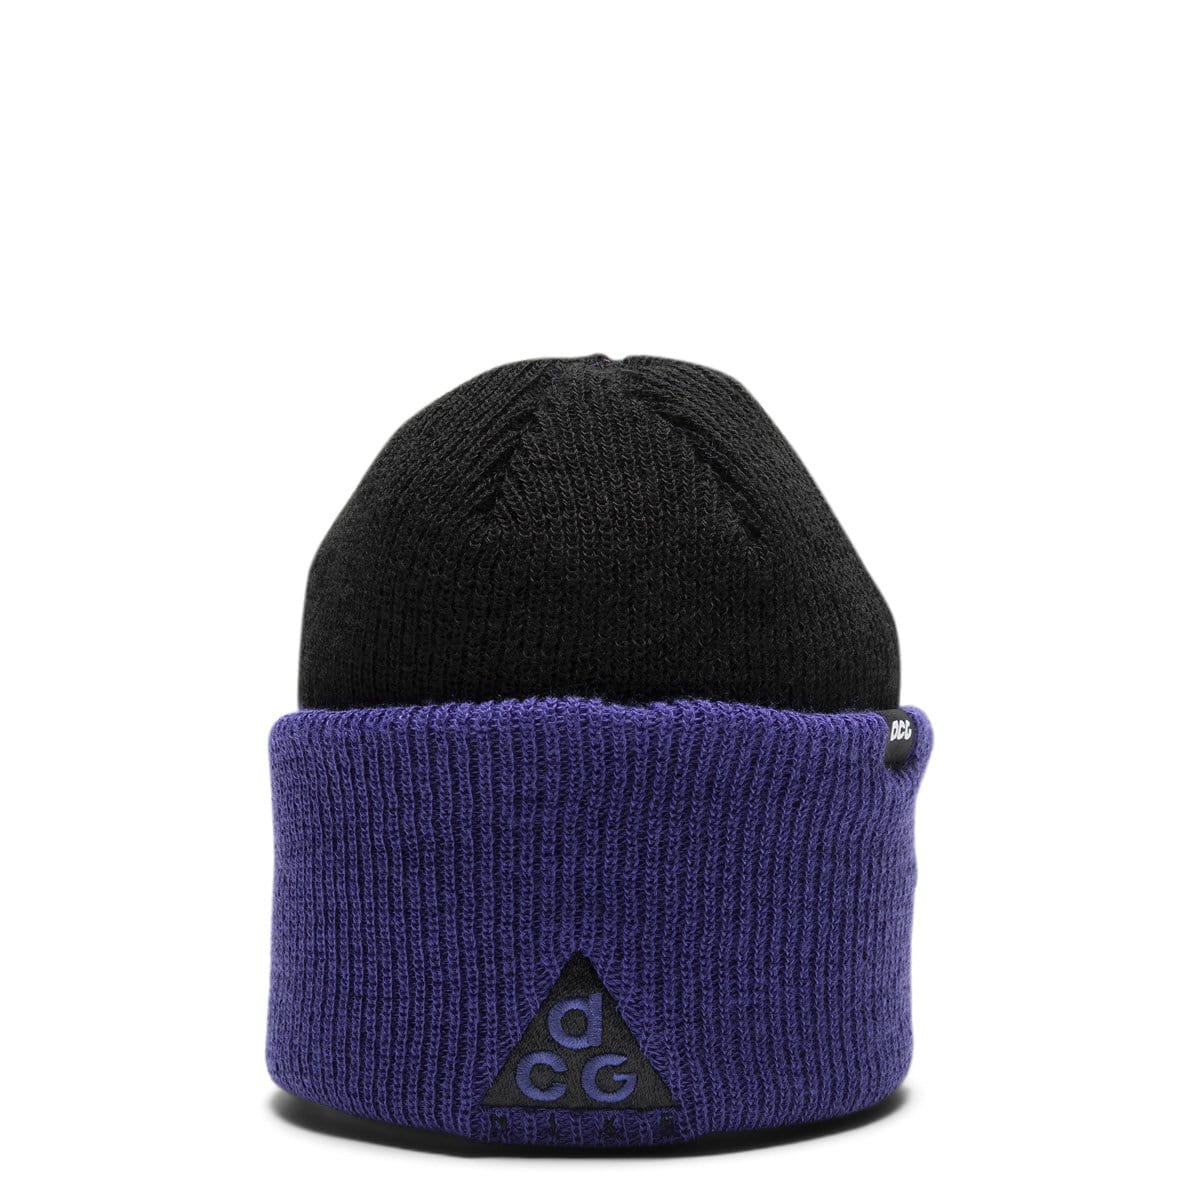 Nike Headwear Black/Fusion Violet [011] / O/S NRG ACG BEANIE